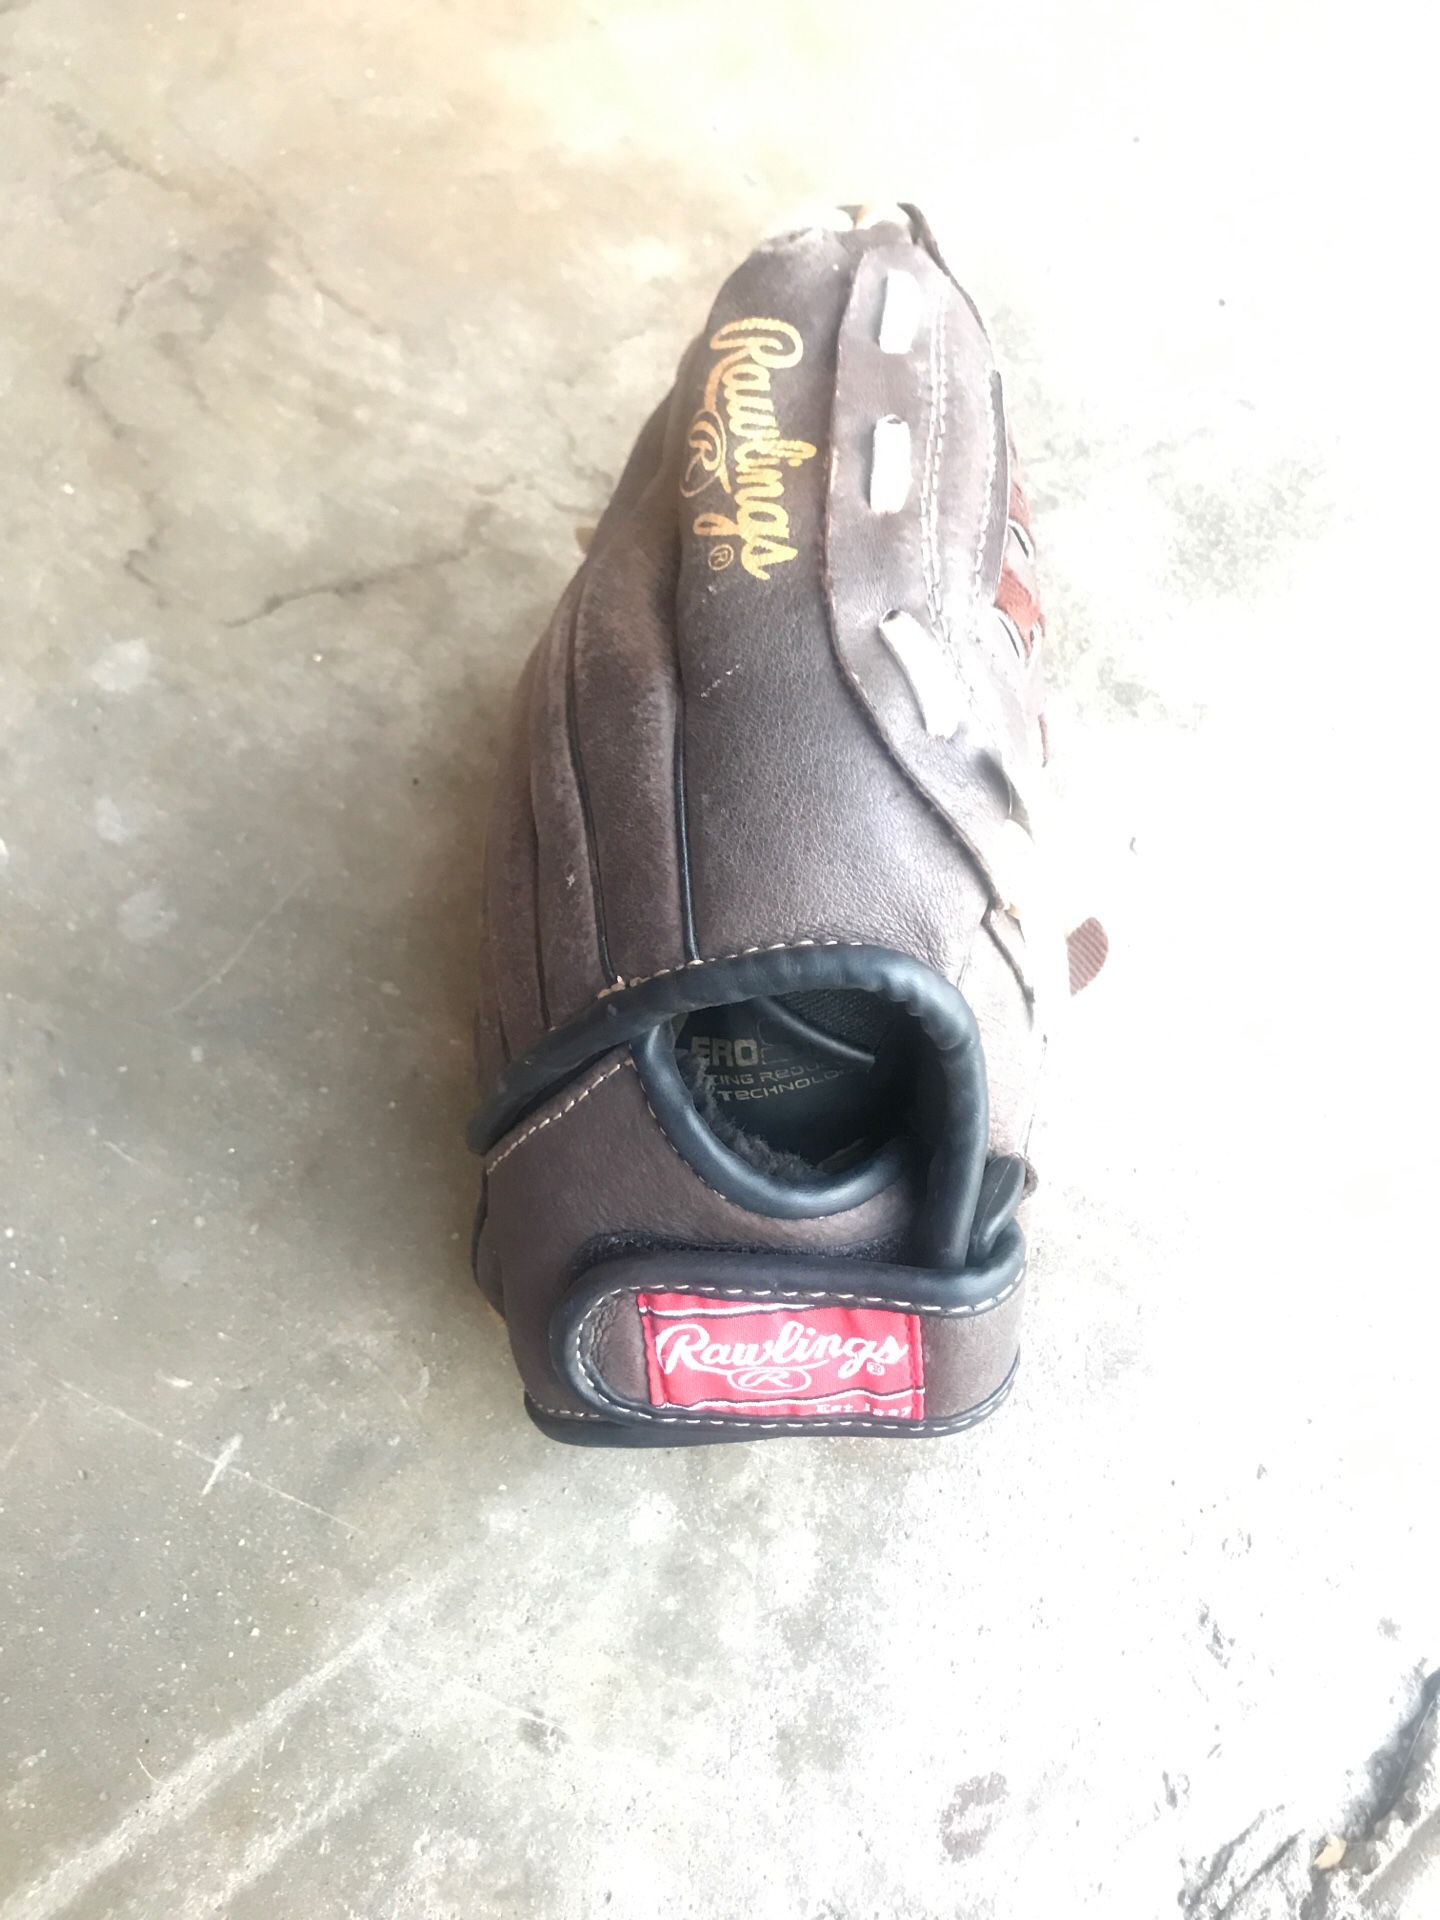 Rawlings 10 inch baseball/softball glove